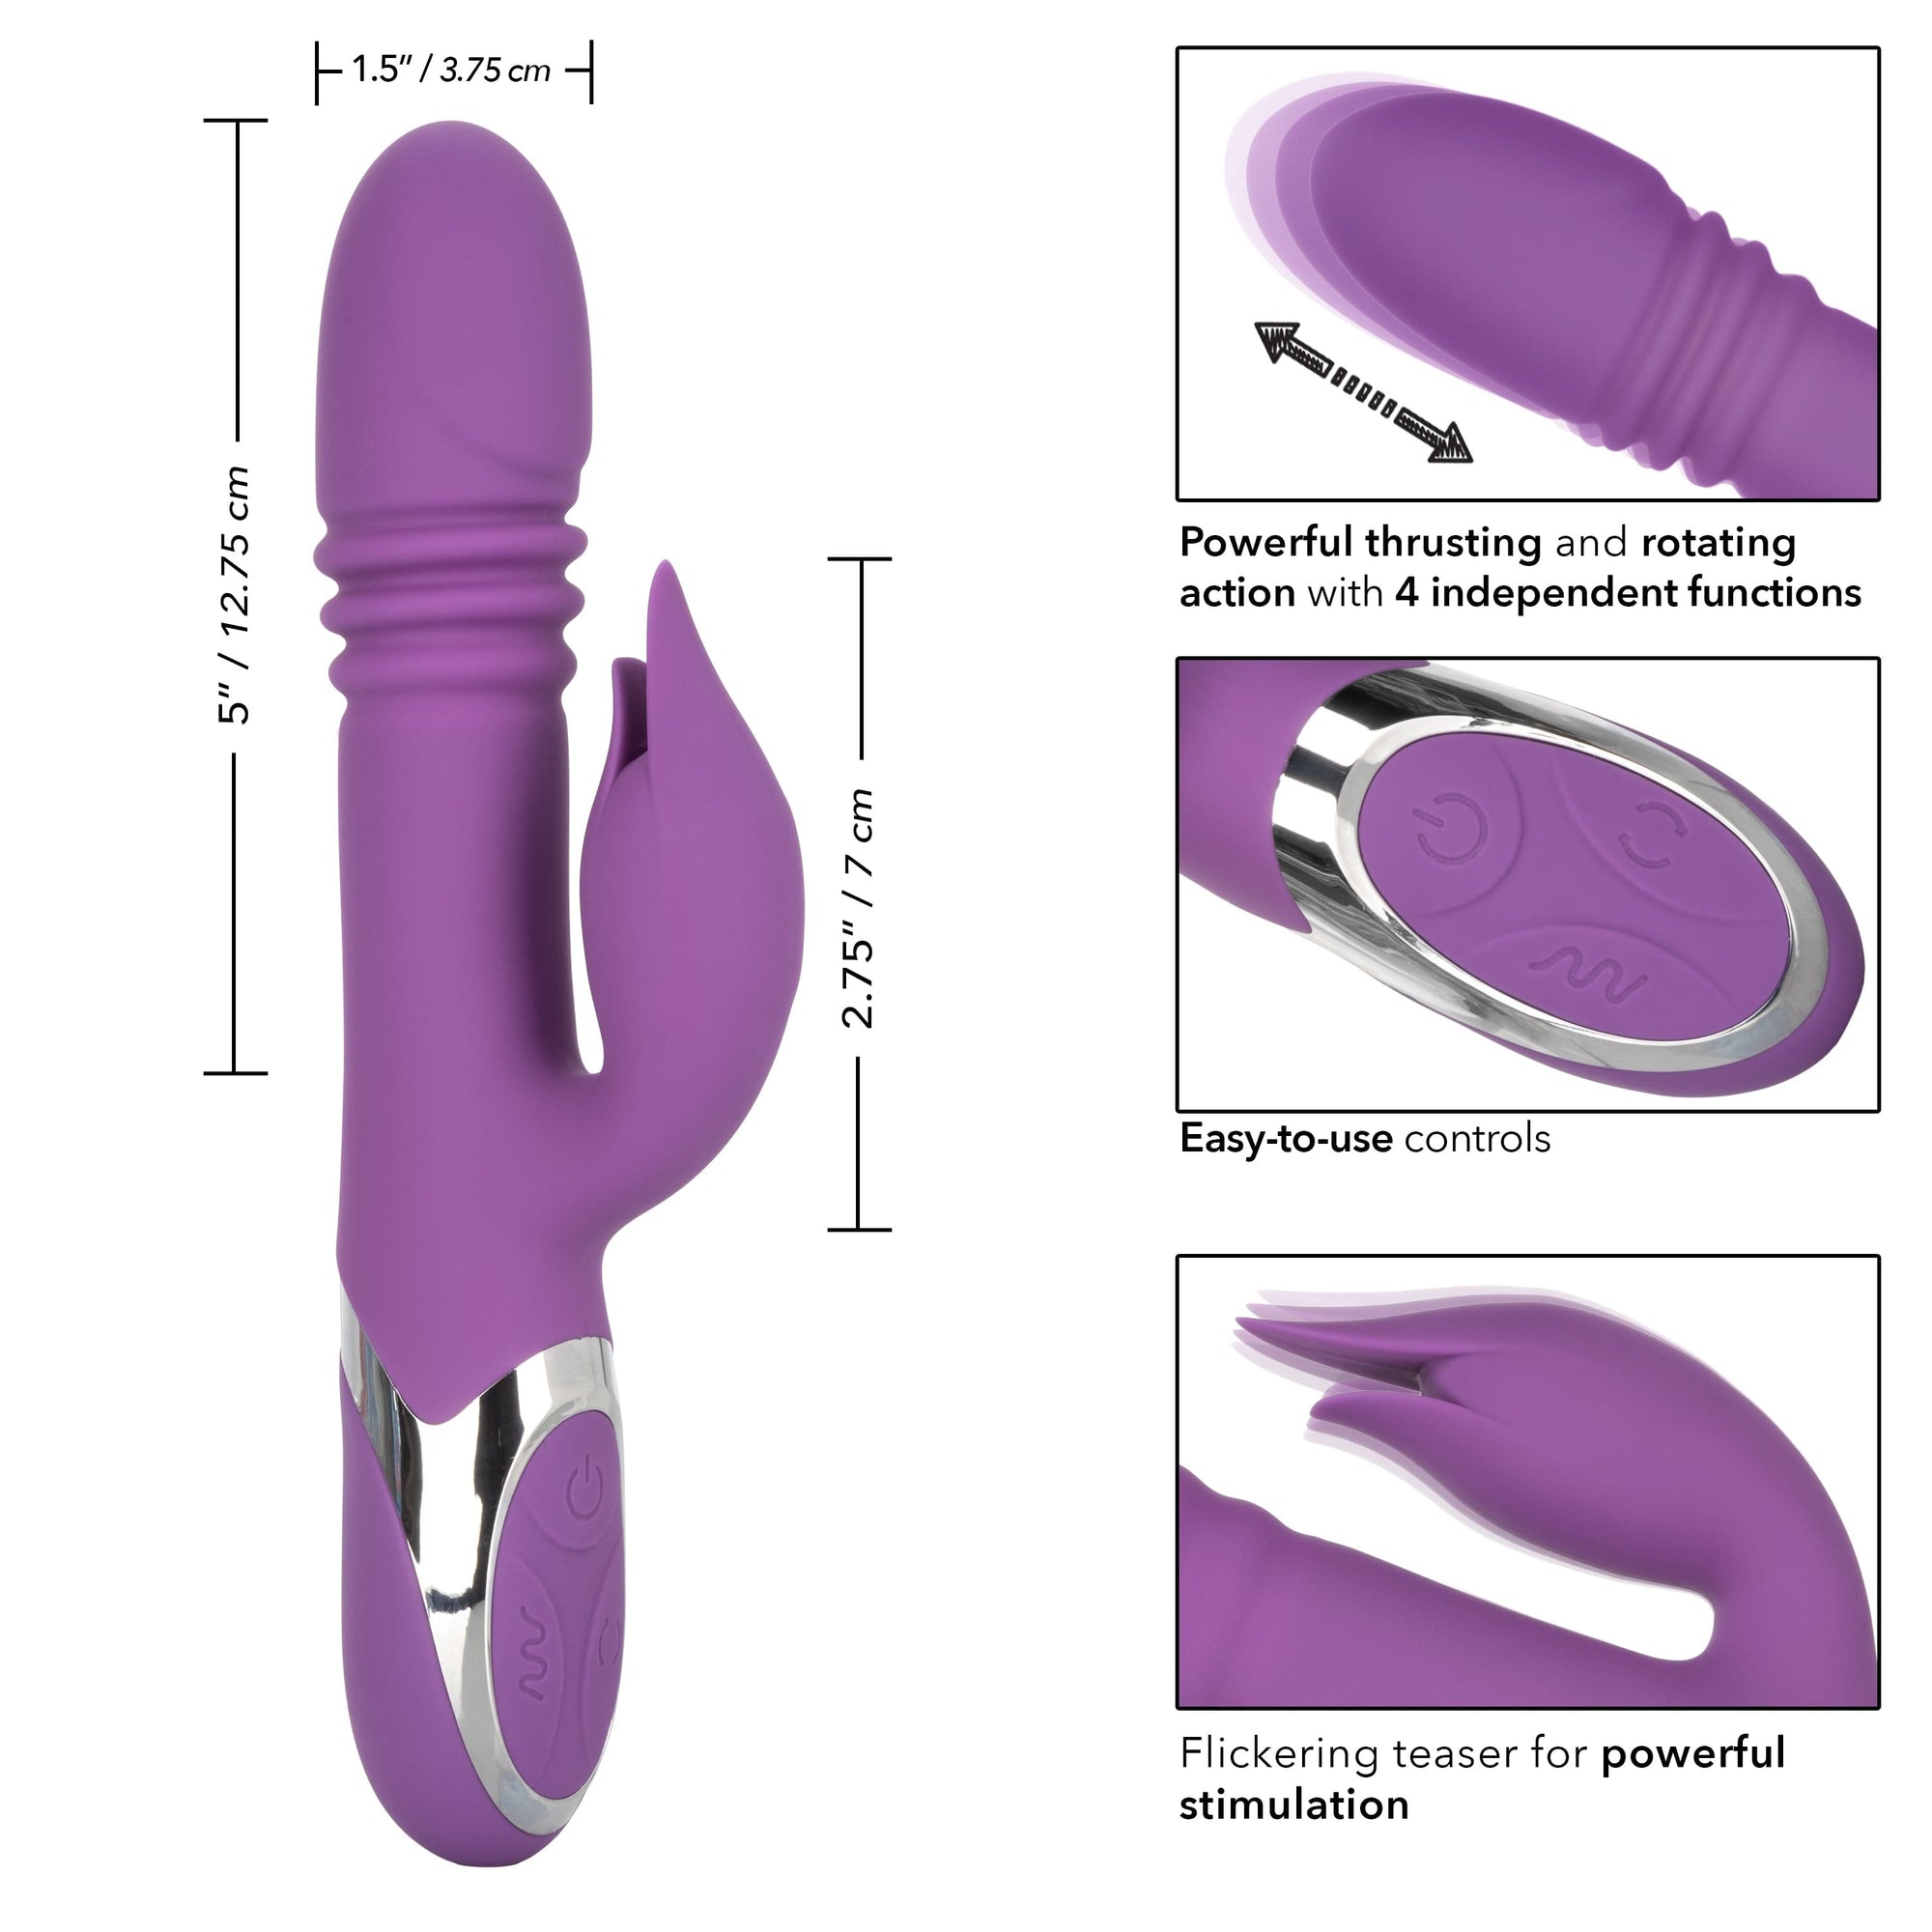 California Exotics - Enchanted Kisser Thrusting Rabbit Vibrator (Purple) Rabbit Dildo (Vibration) Rechargeable 716770093240 CherryAffairs